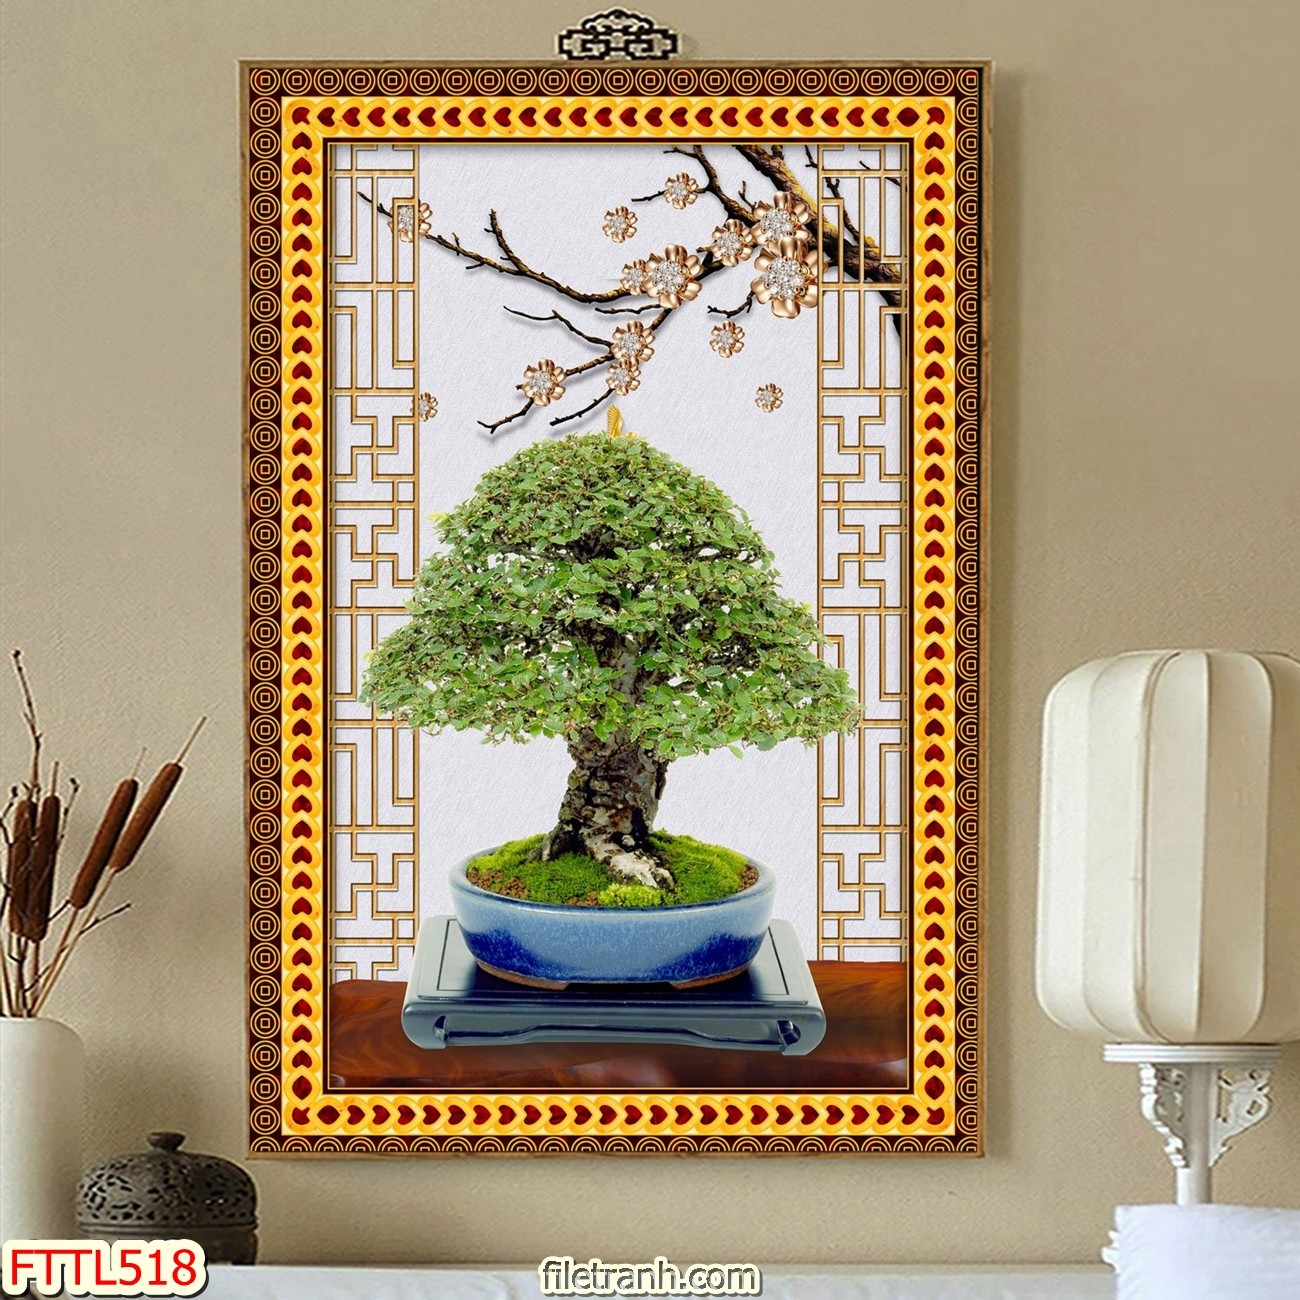 https://filetranh.com/file-tranh-chau-mai-bonsai/file-tranh-chau-mai-bonsai-fttl518.html